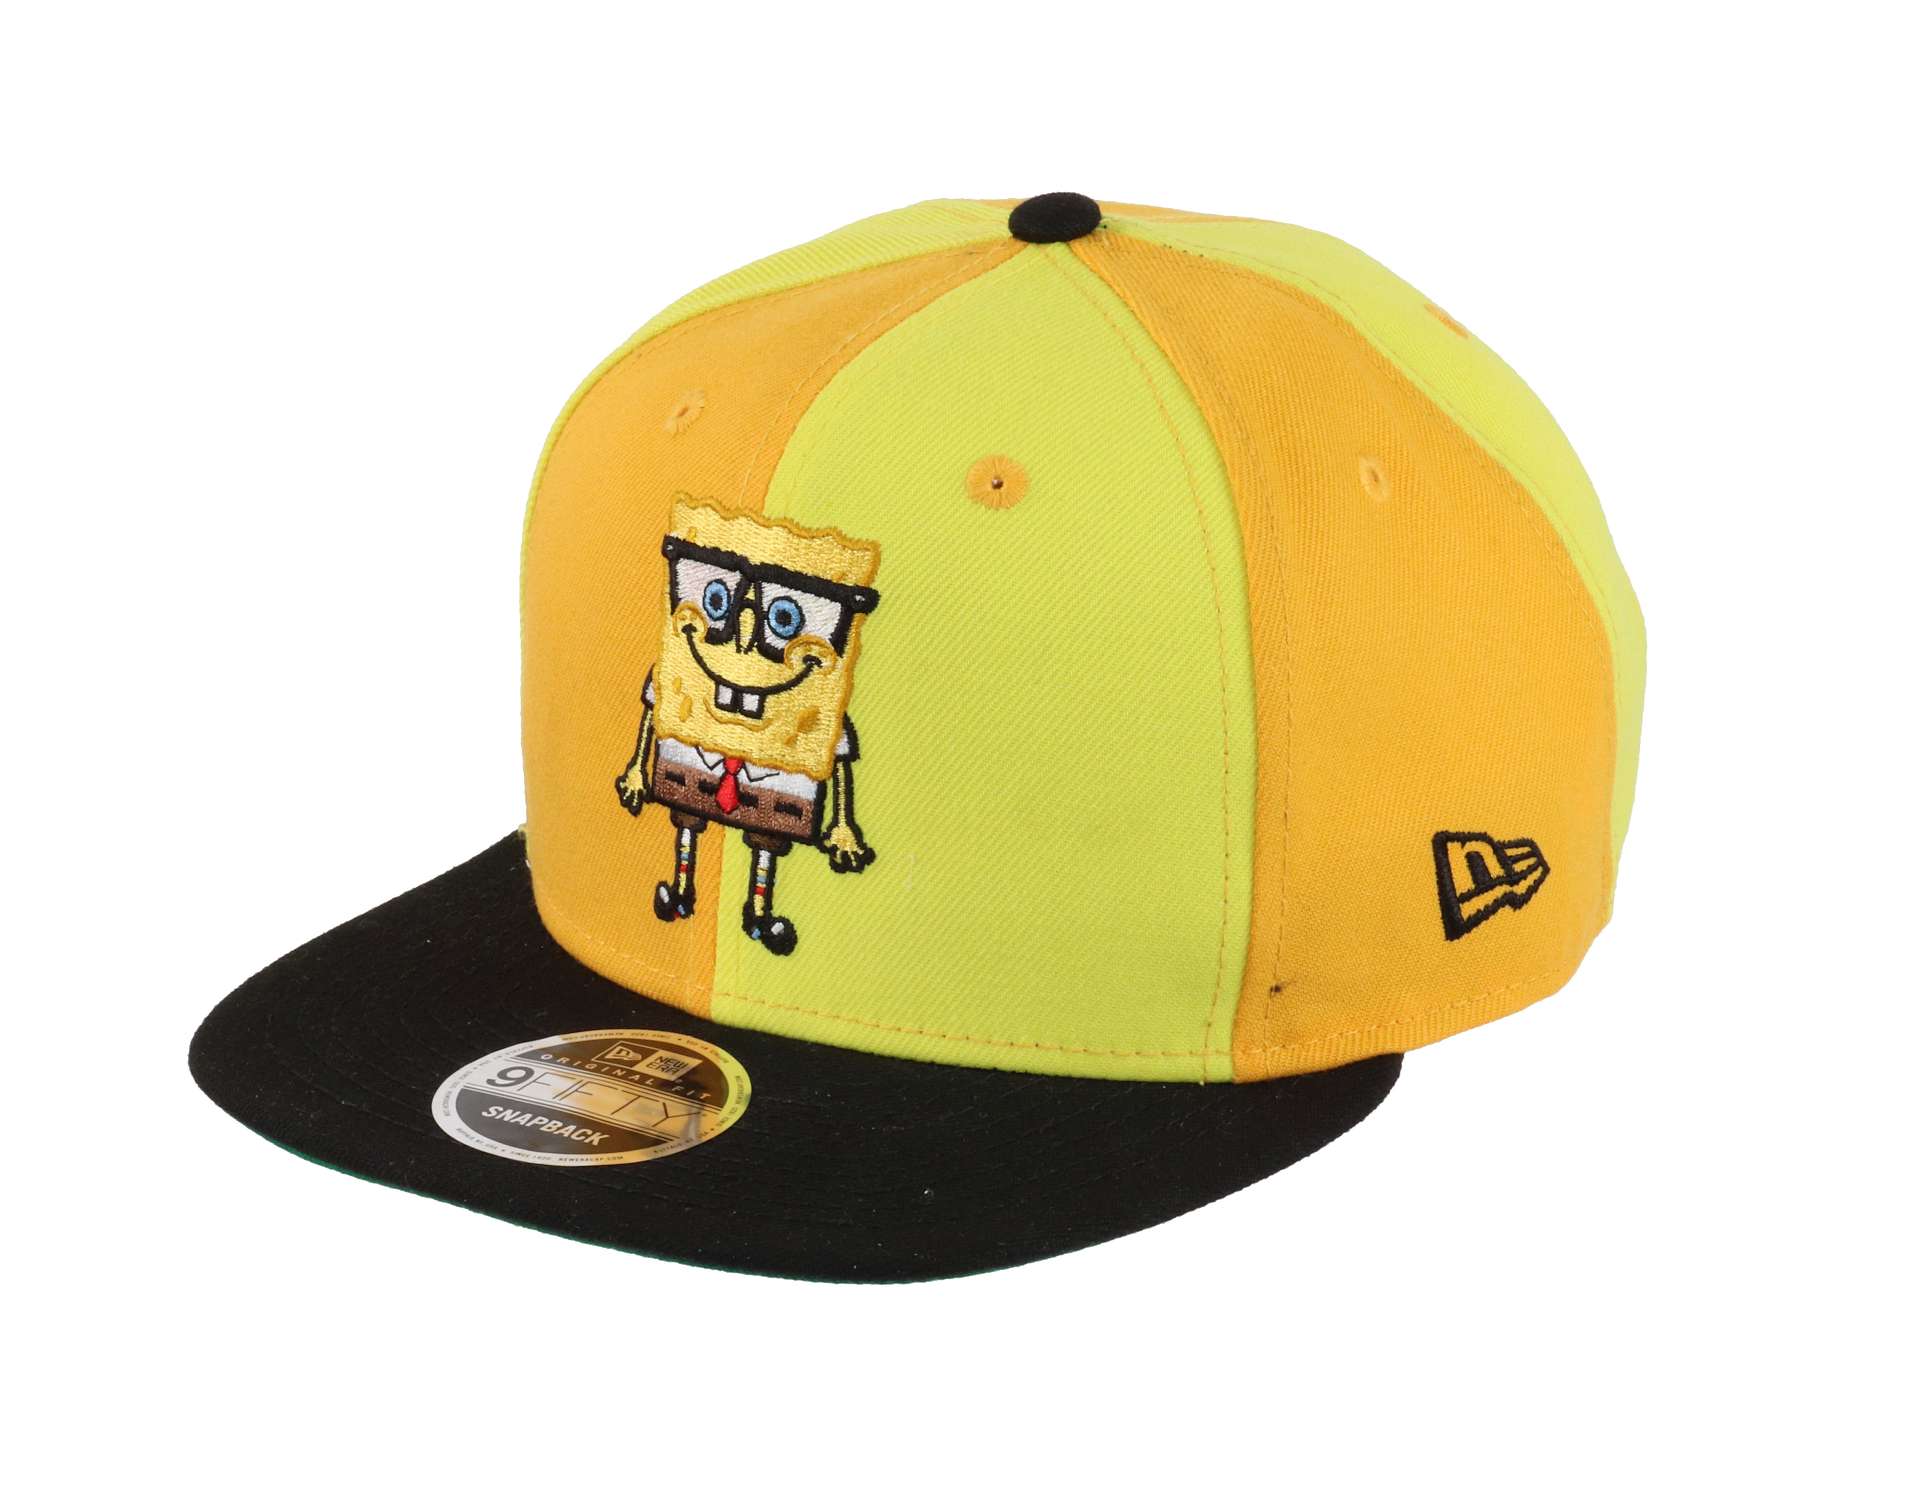 Spongebob Squarepants Spongebob Multi Yellow 9Fifty Original Fit Snapback Cap New Era